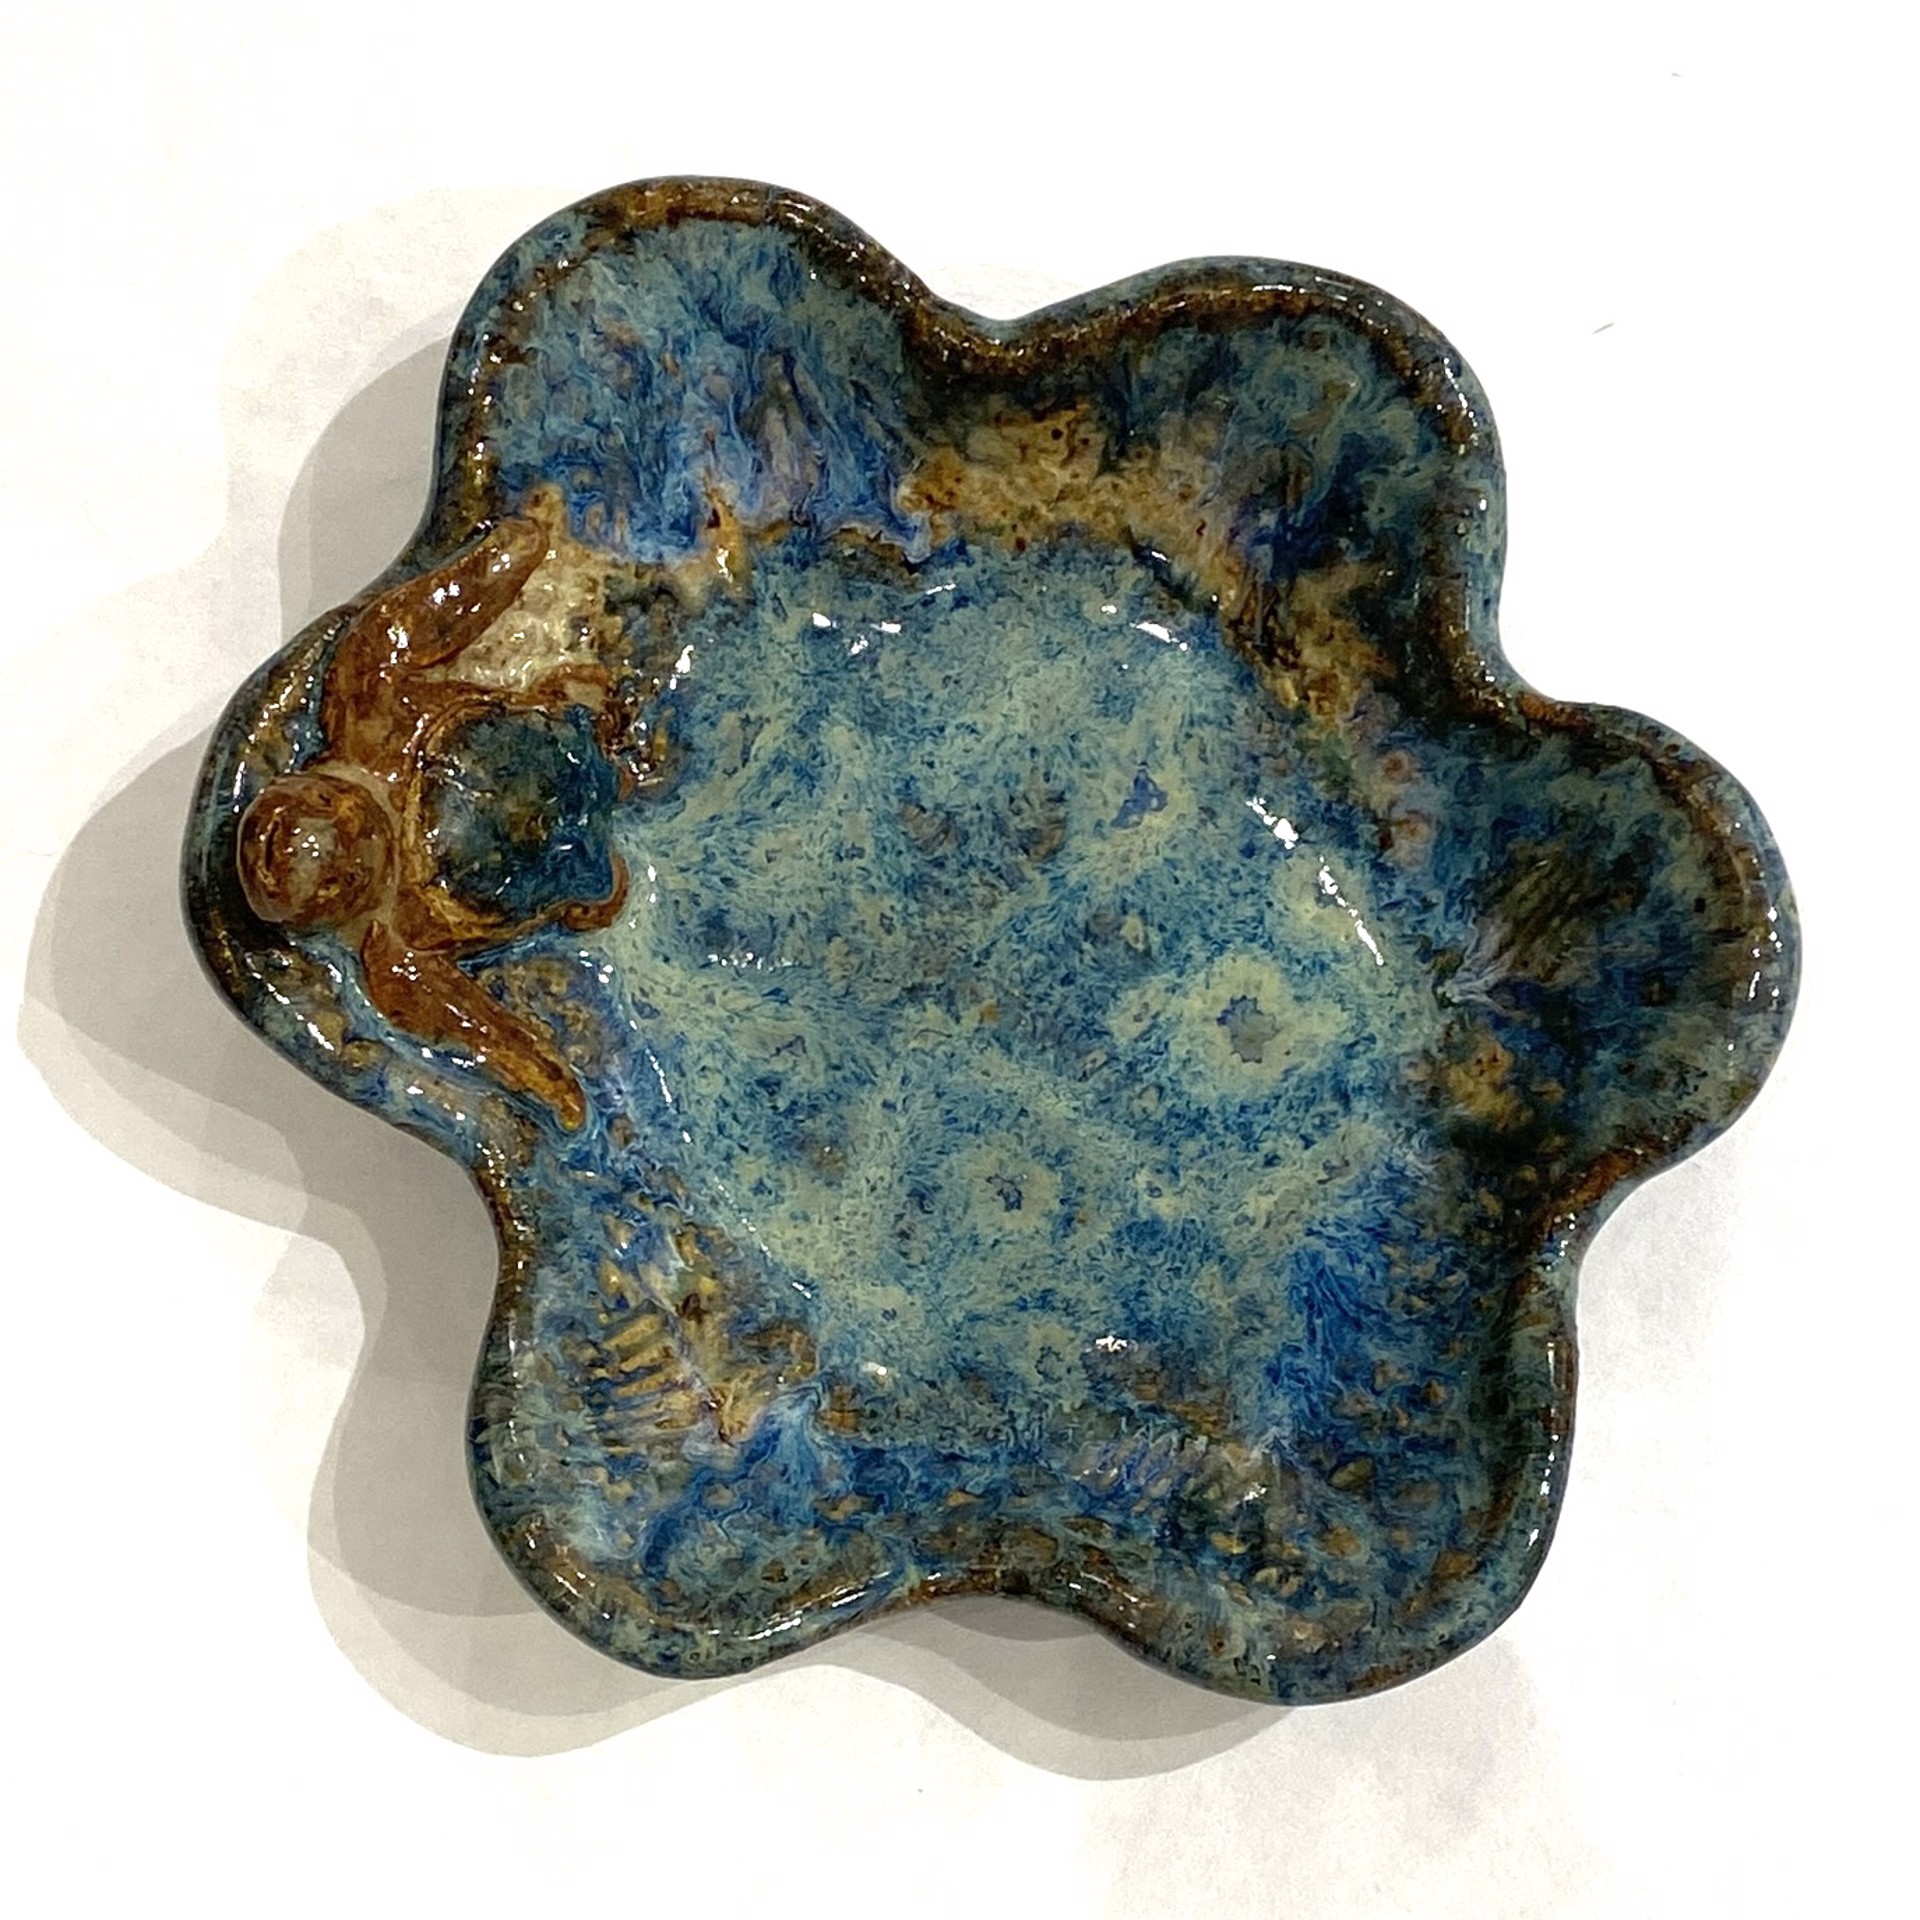 Small Pool Dish with Turtle (Blue Glaze) LG23-28 by Jim & Steffi Logan